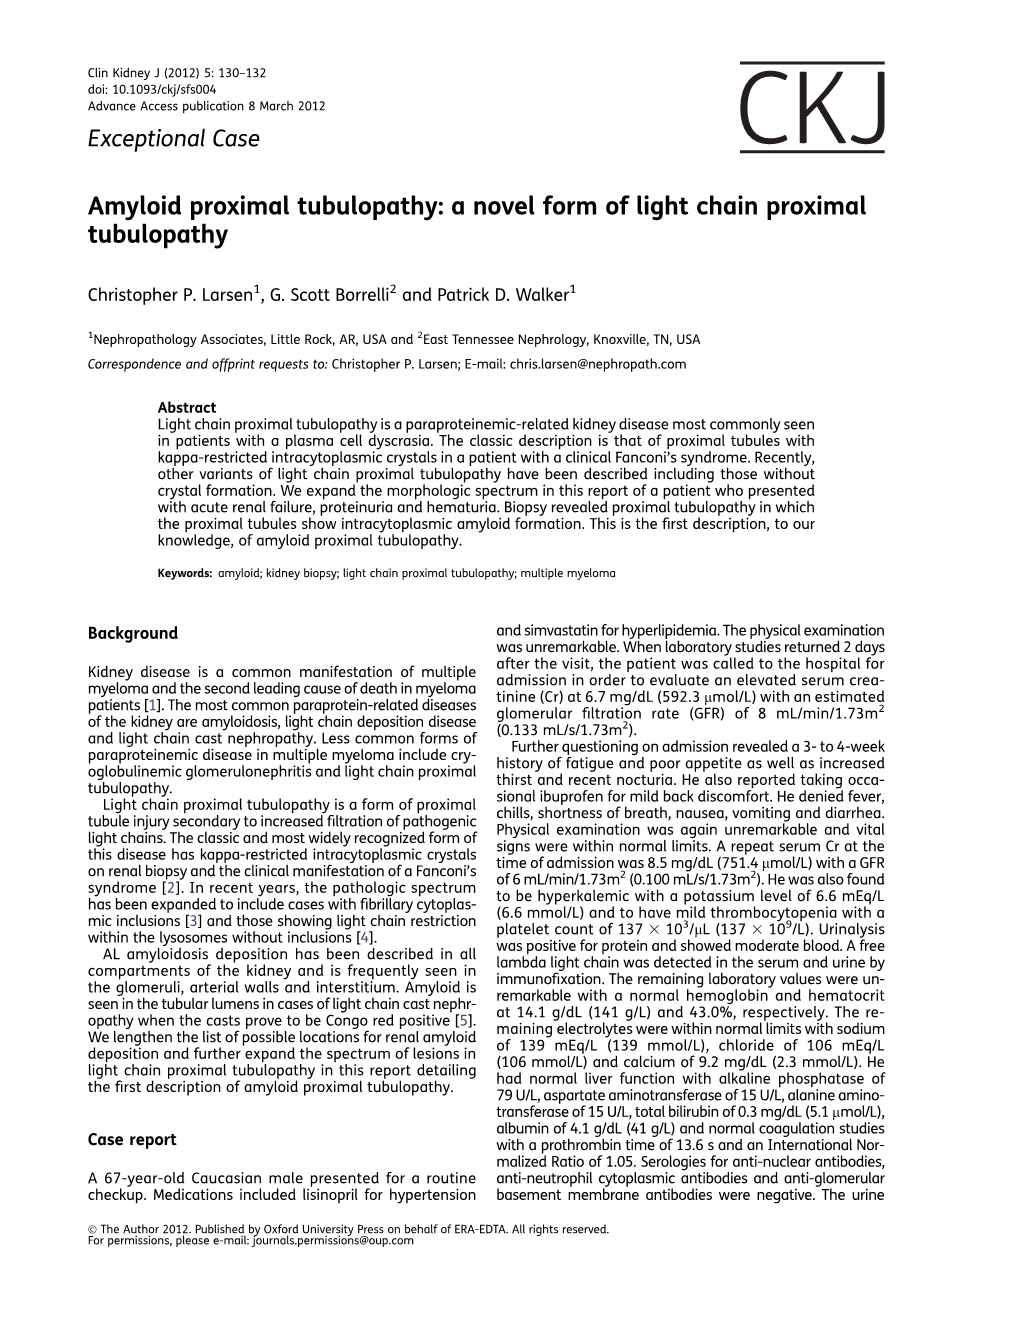 Amyloid Proximal Tubulopathy: a Novel Form of Light Chain Proximal Tubulopathy